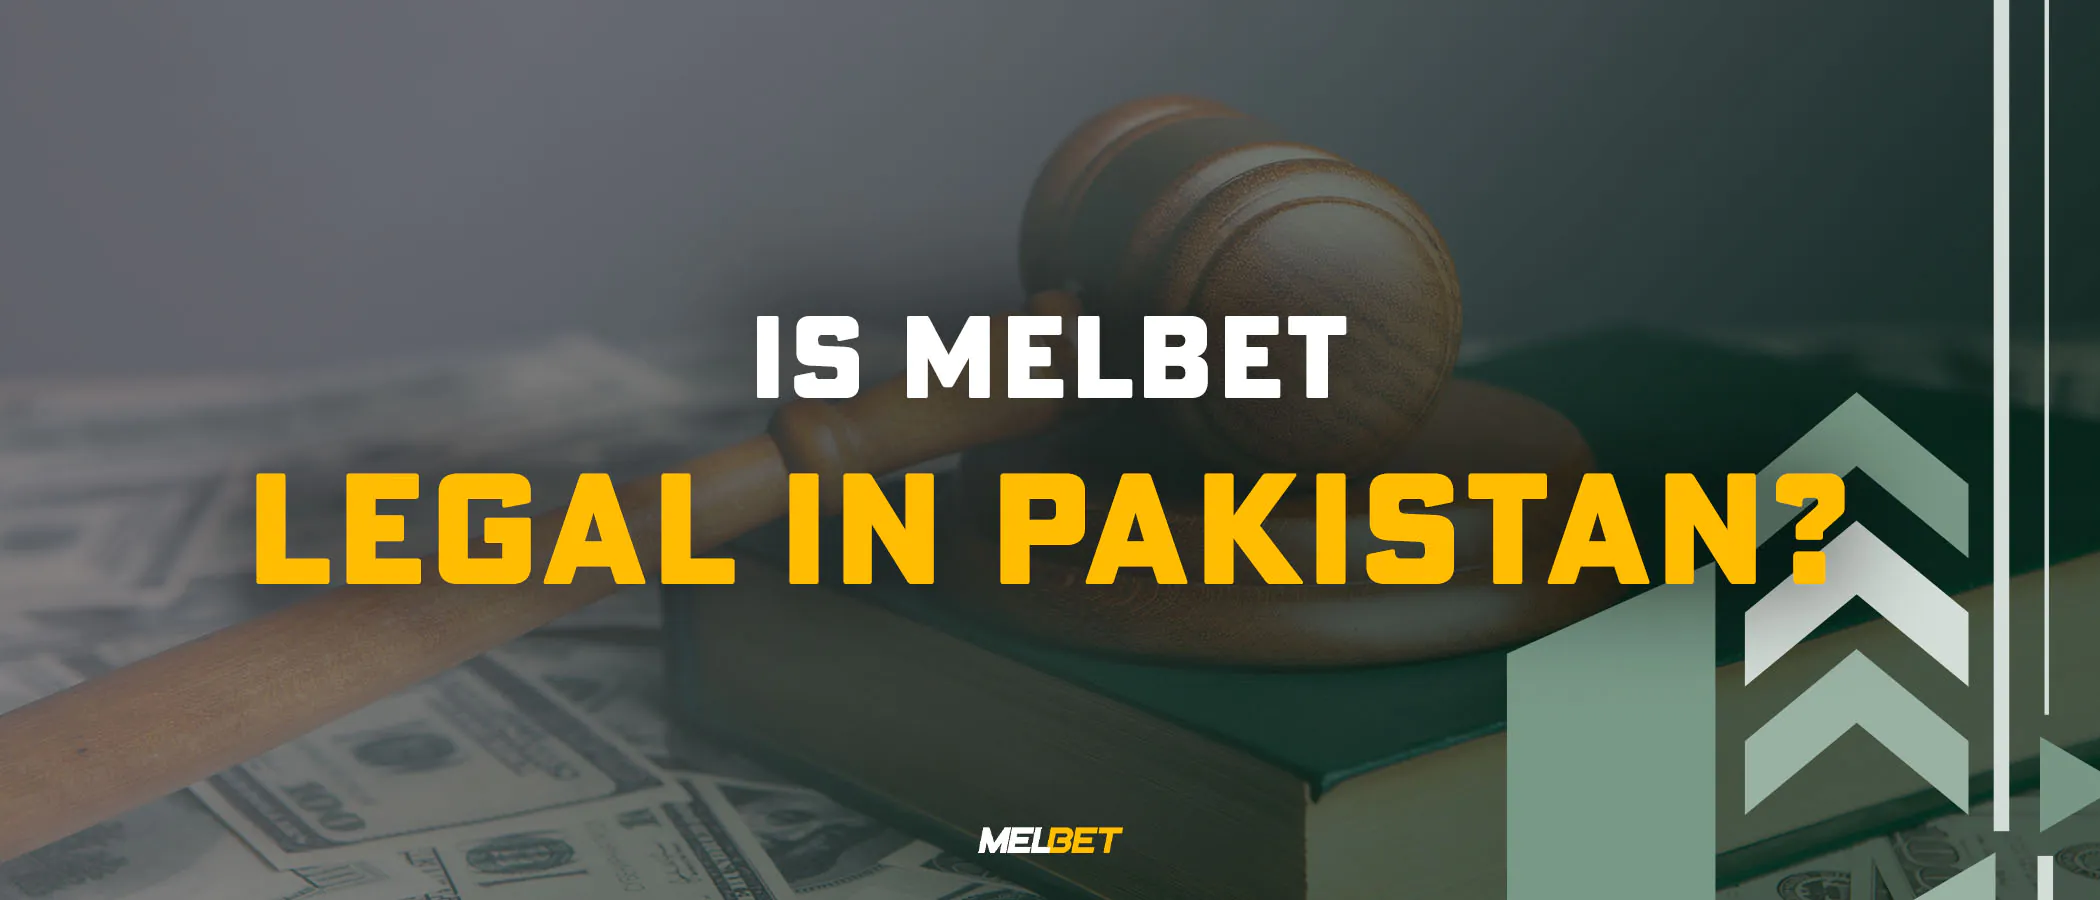 Is Melbet Legal in Pakistan